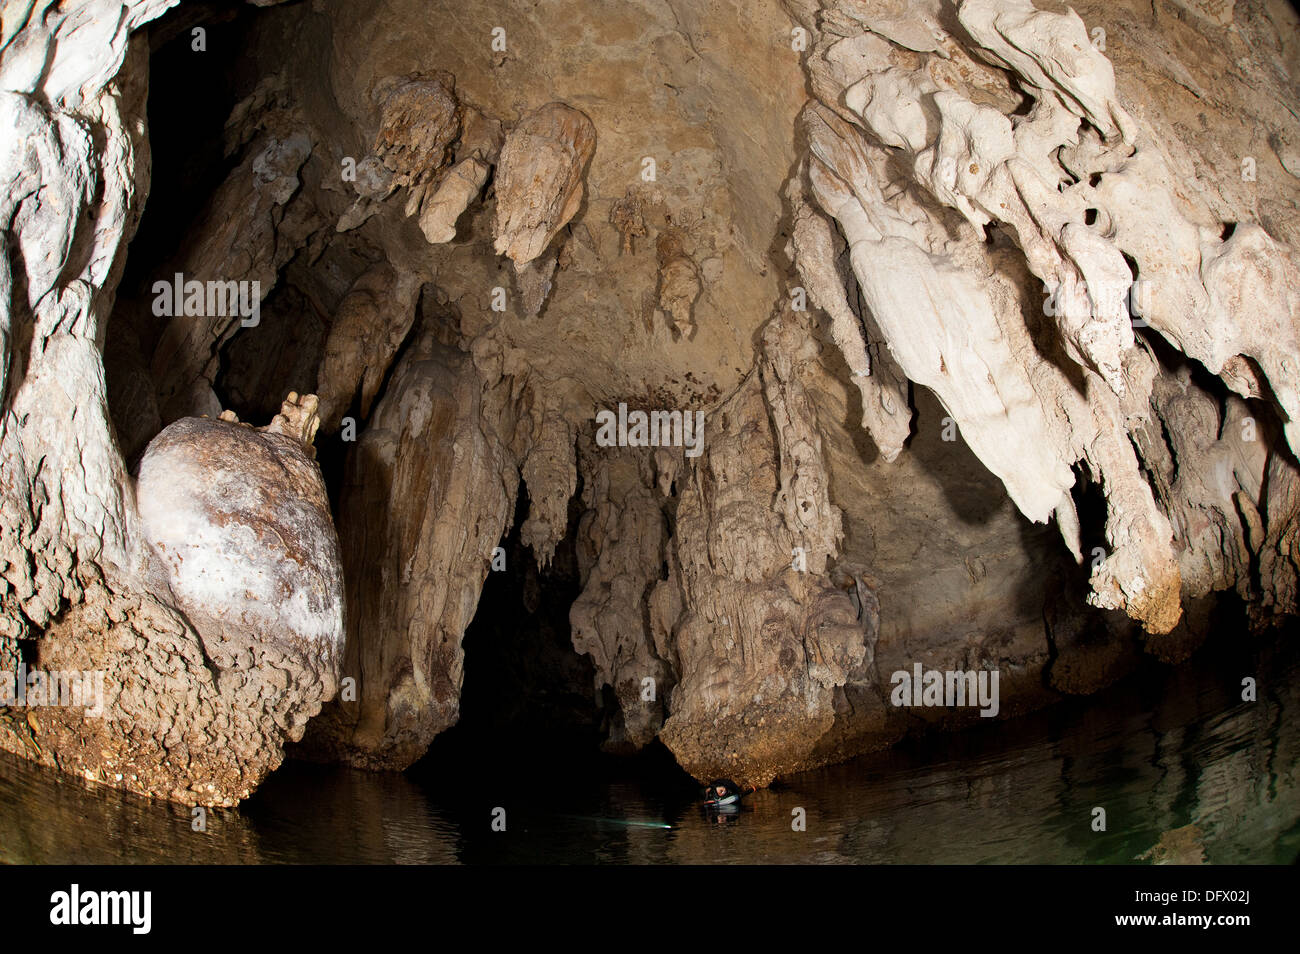 Snorkeler explores the spectacular Tomolol caves, southern Raja Ampat, West Papua, Indonesia. Stock Photo